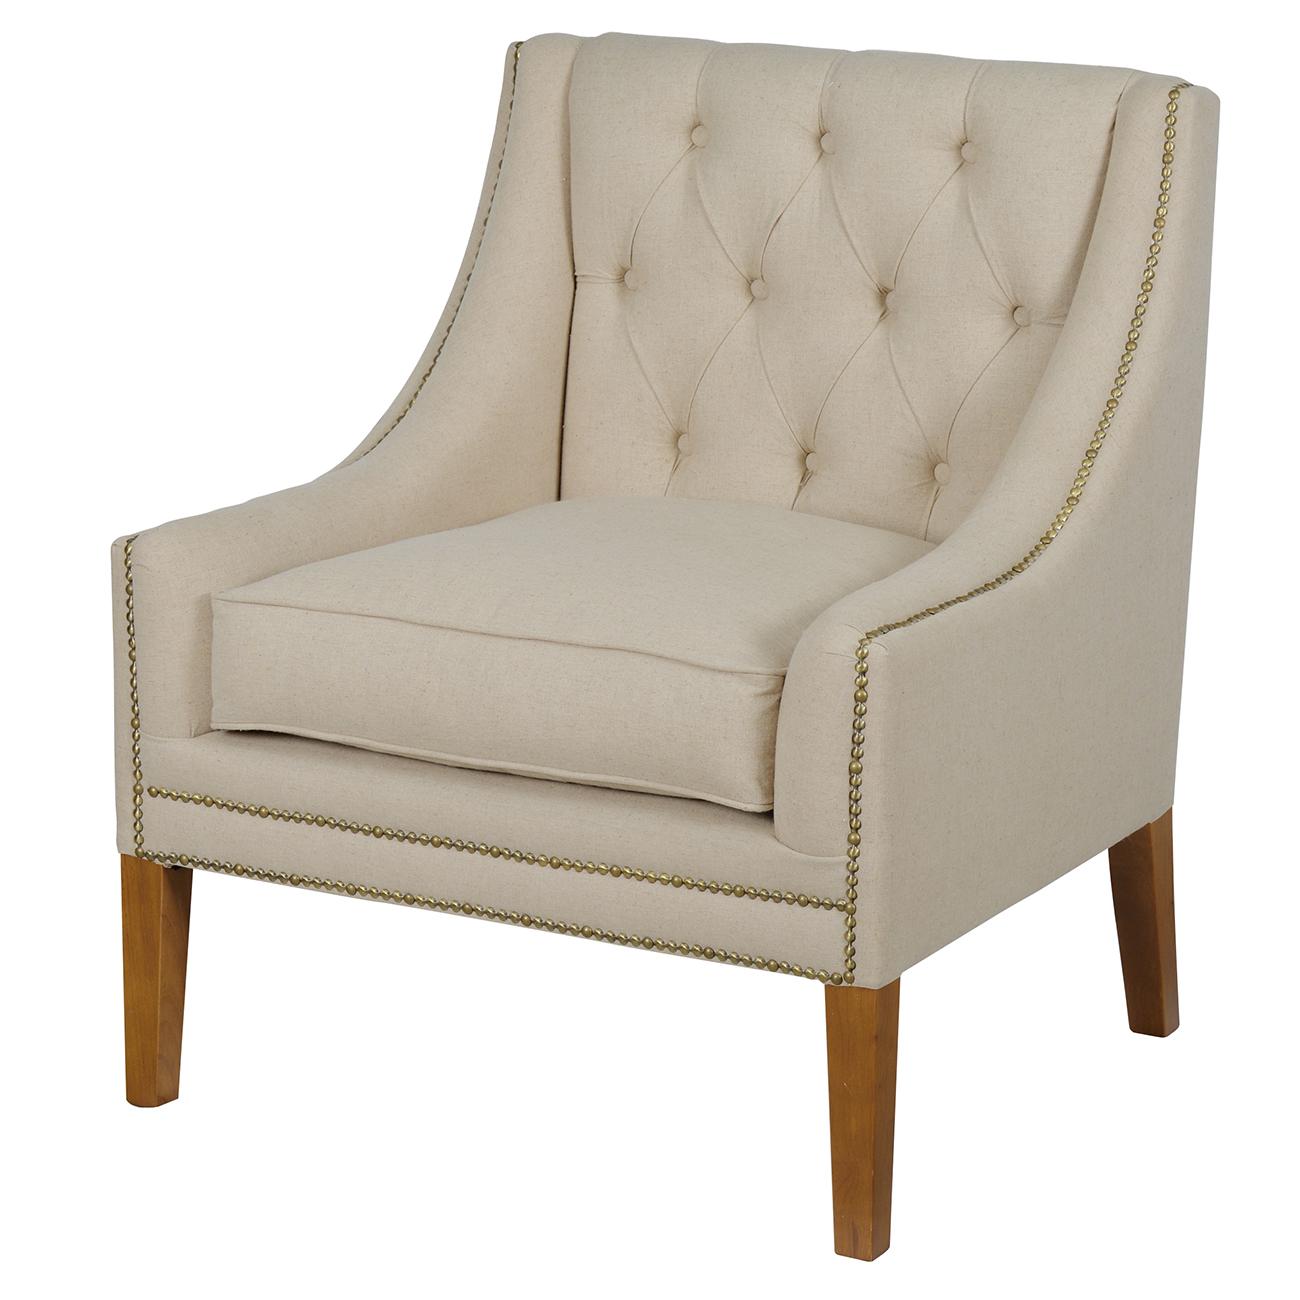 Traditional Arm Chairs AV41905 AV41905-Armchair-Set-2 in Tan Fabric